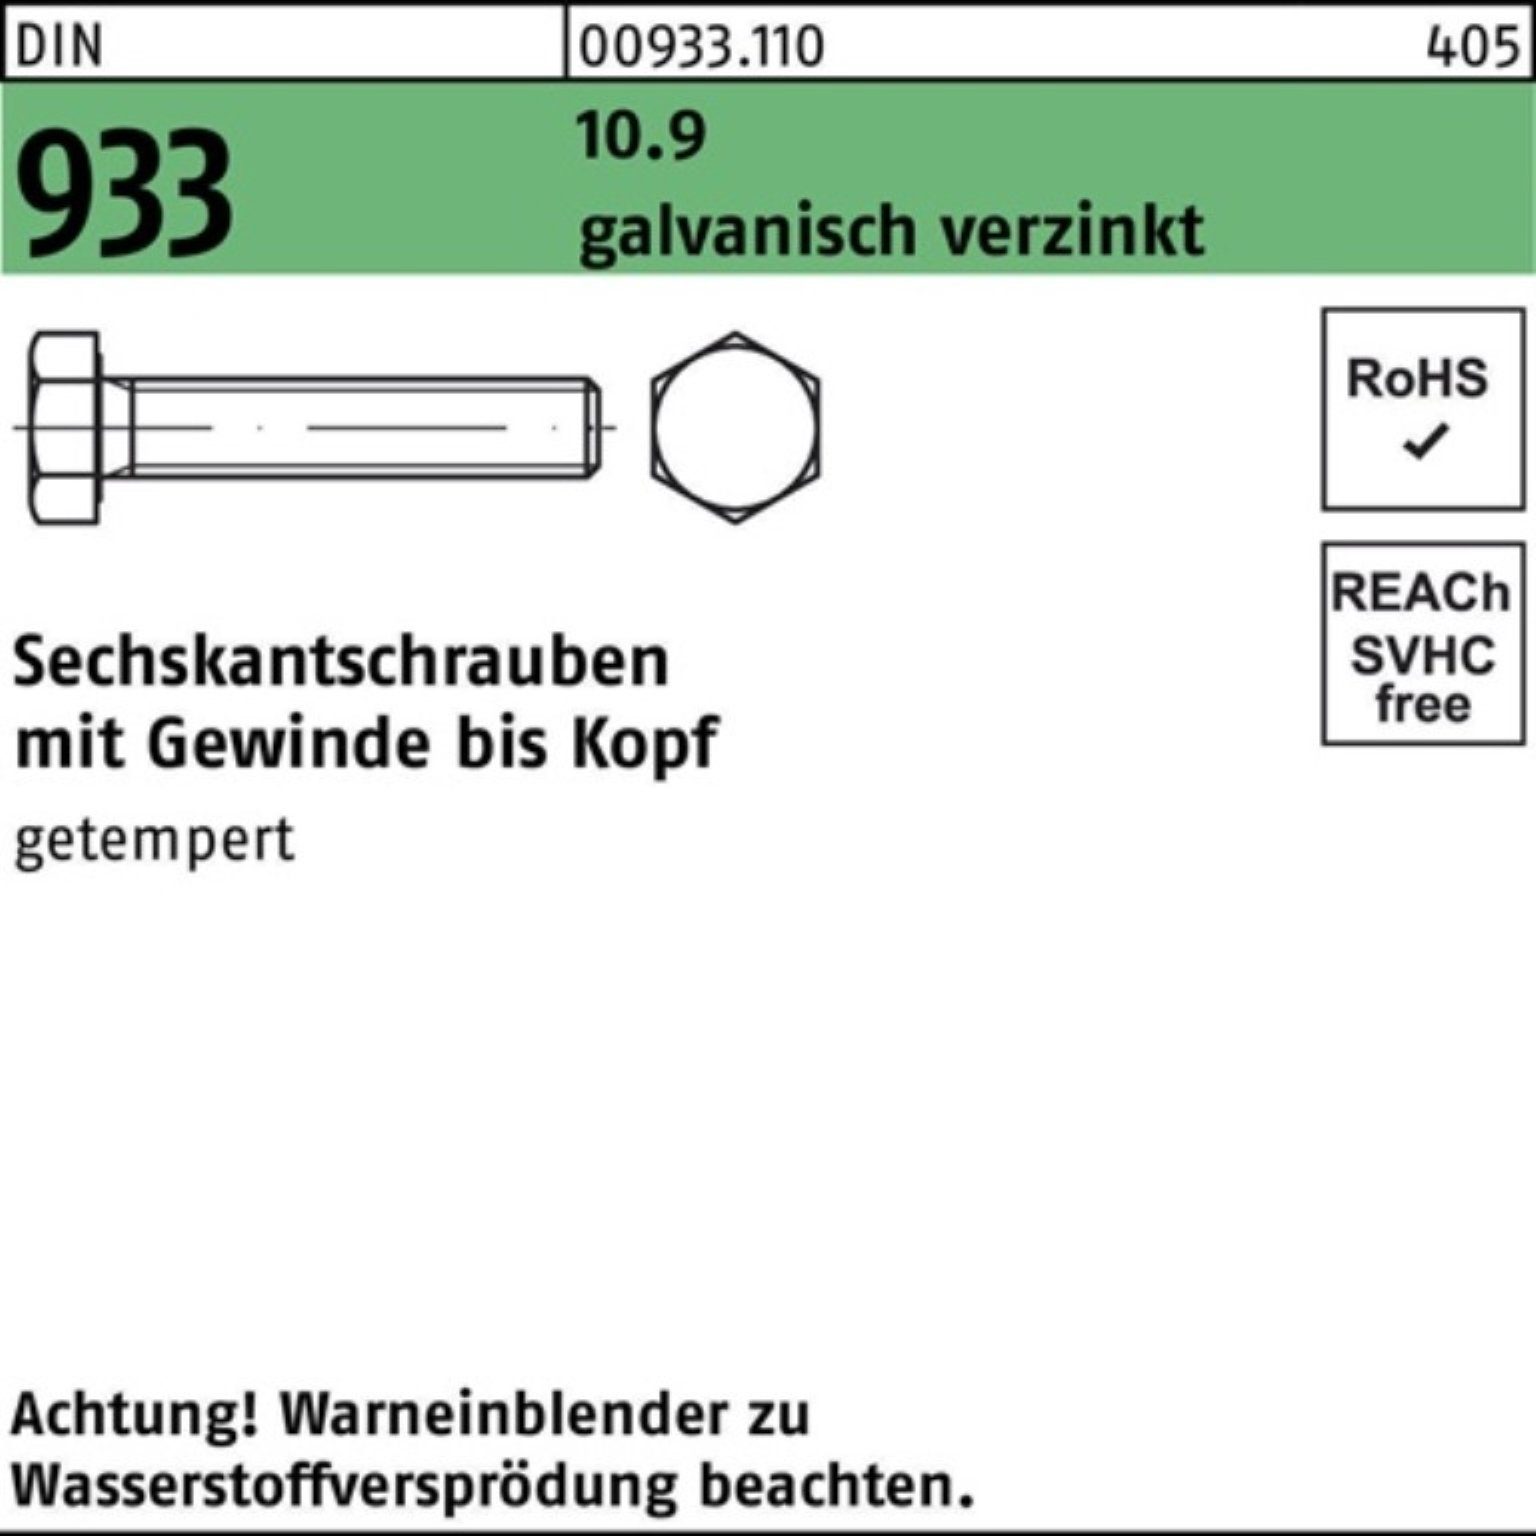 Sechskantschraube 10.9 100er 25 Sechskantschraube Reyher Pack M20x VG galv.verz. St 933 DIN 180